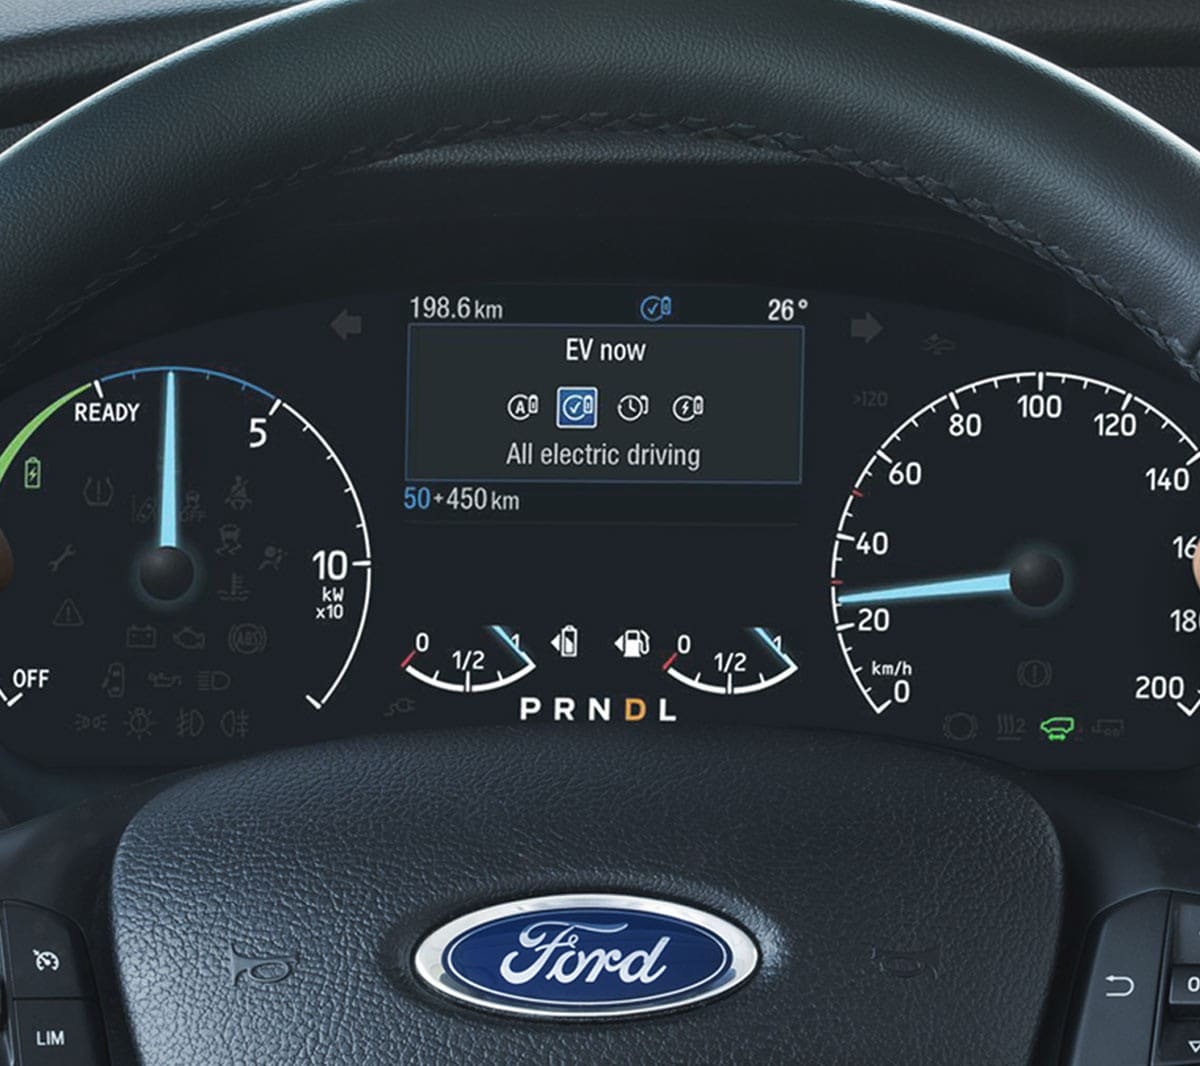 New Tourneo Custom interior dashboard close up